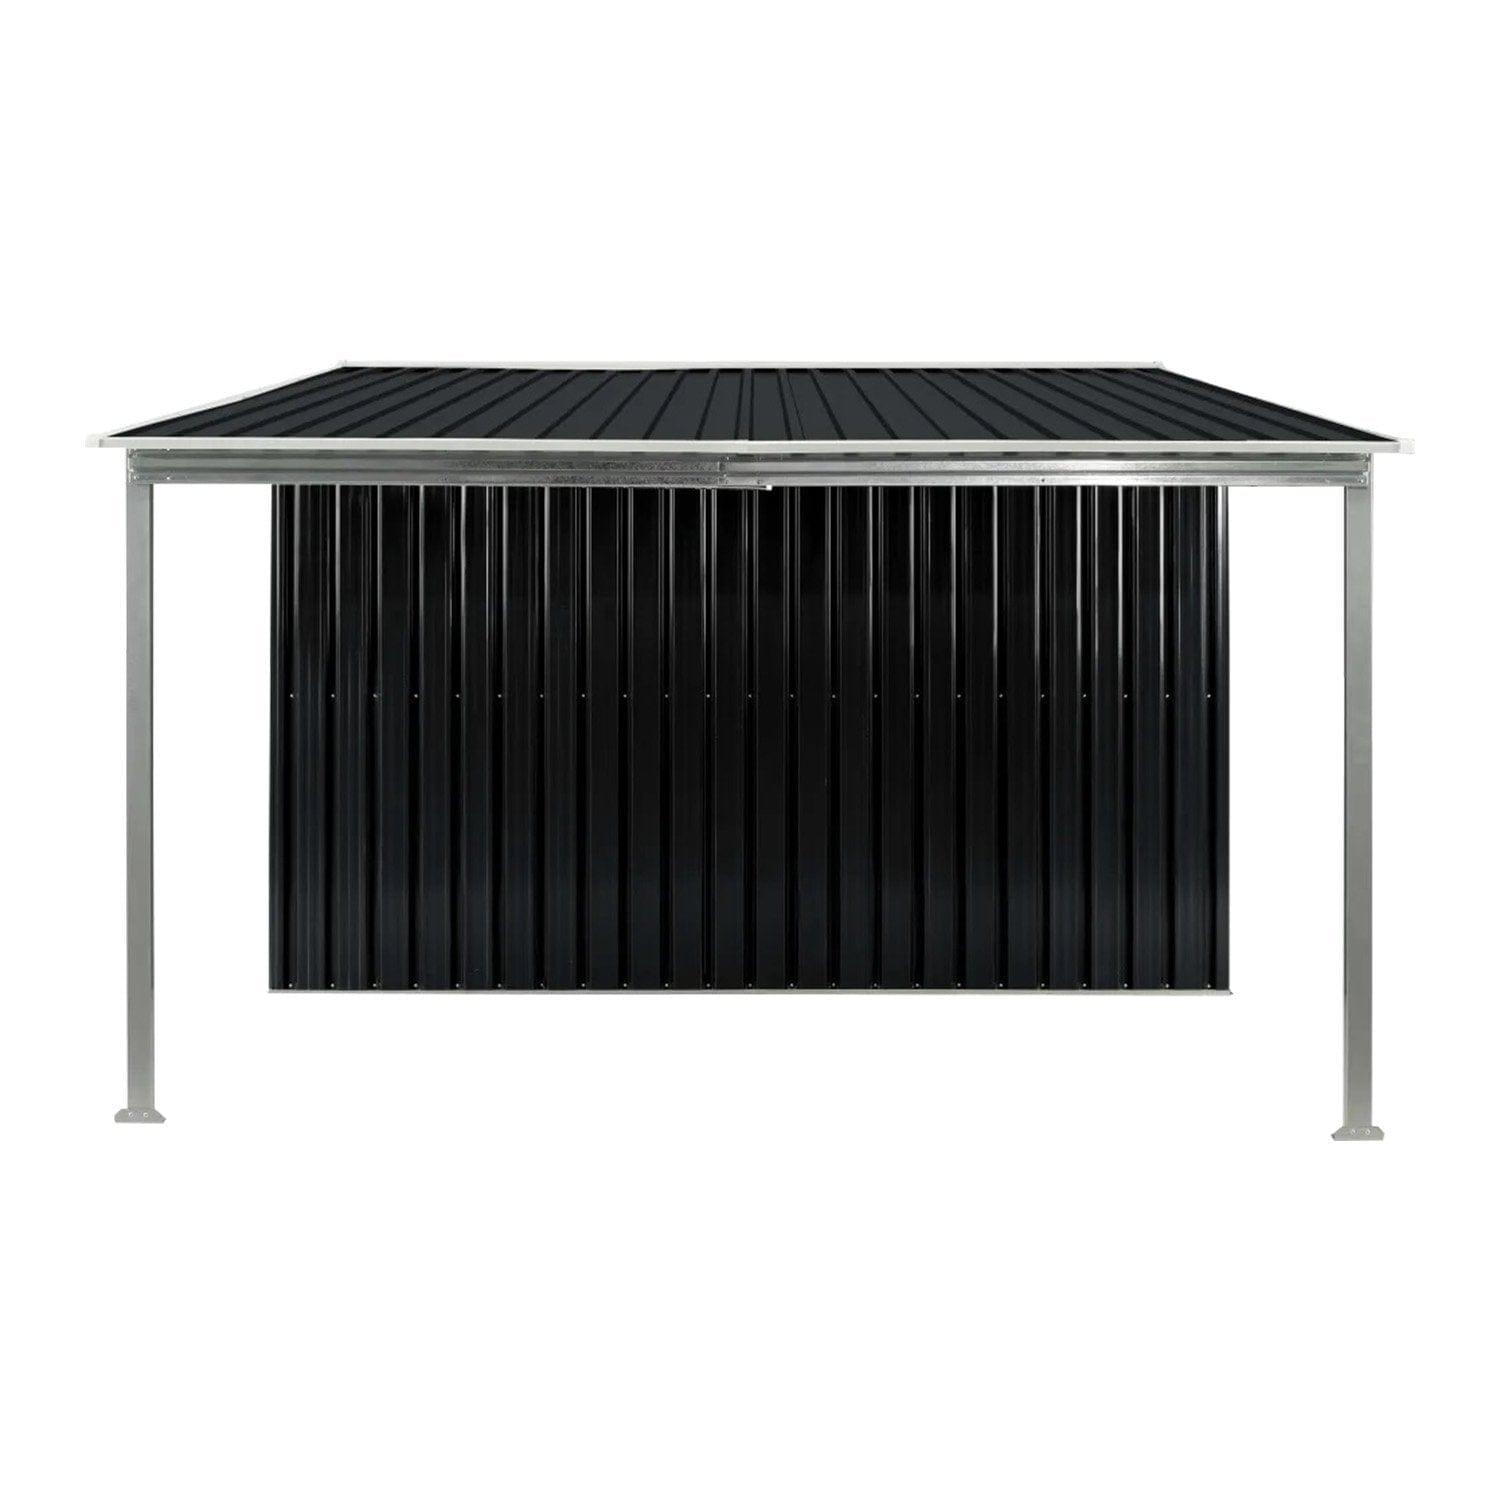 6x8ft Zinc Steel Garden Shed with Open Storage - Black